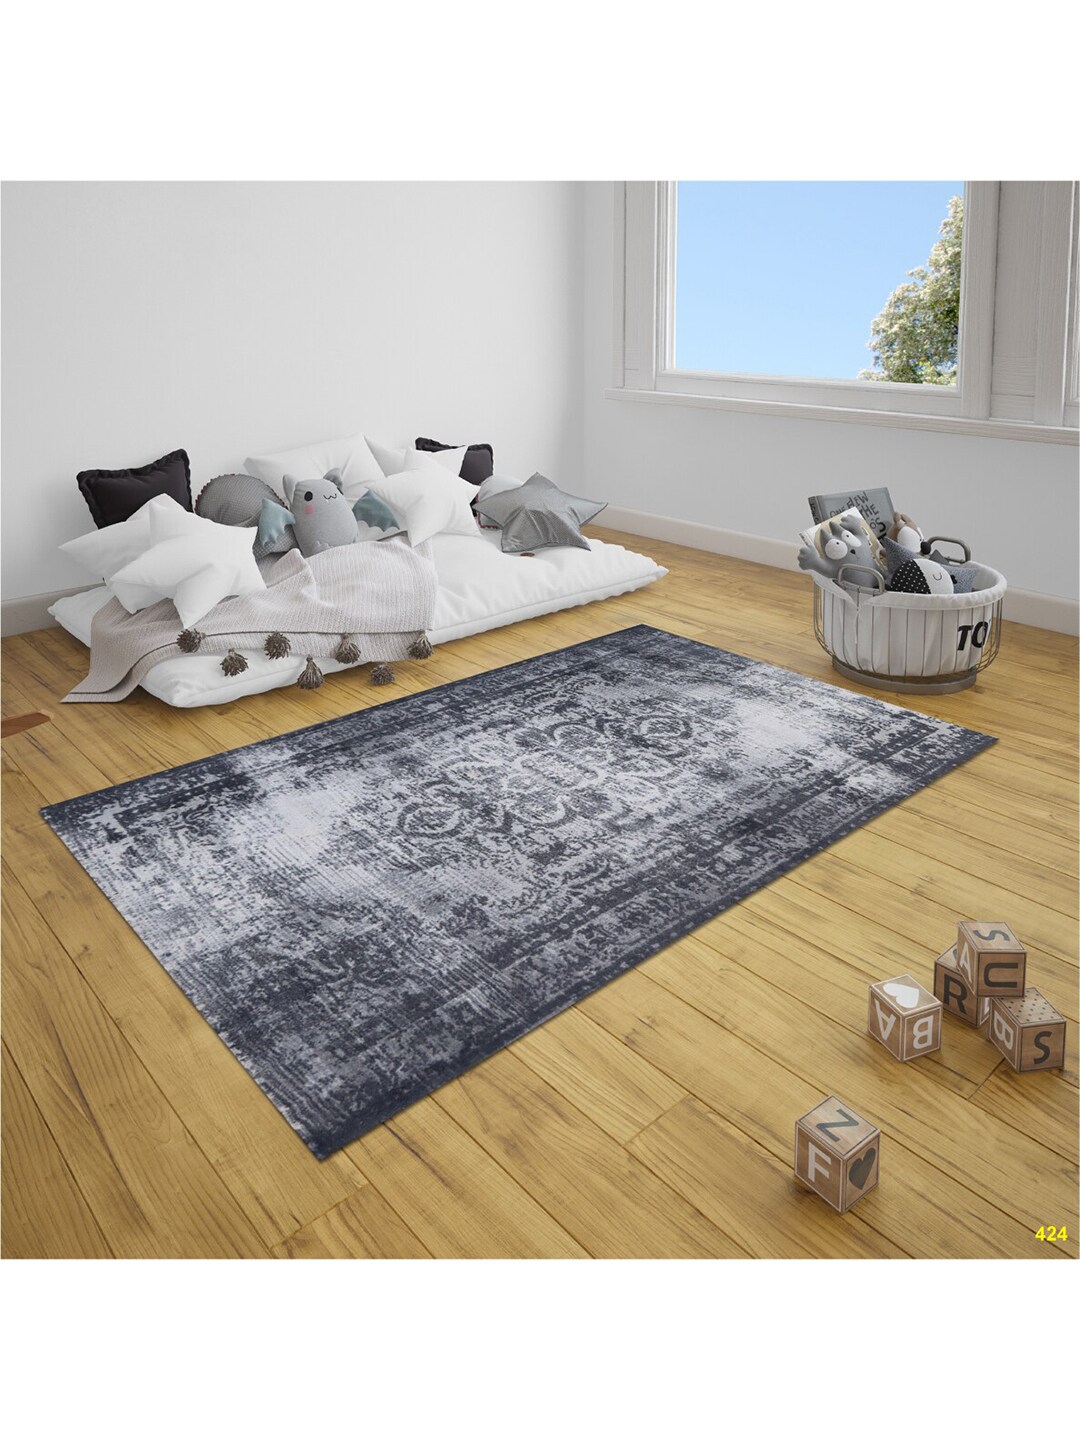 SANDED EDGE Black & White Traditional Printed Rectangular Wool Carpet Price in India